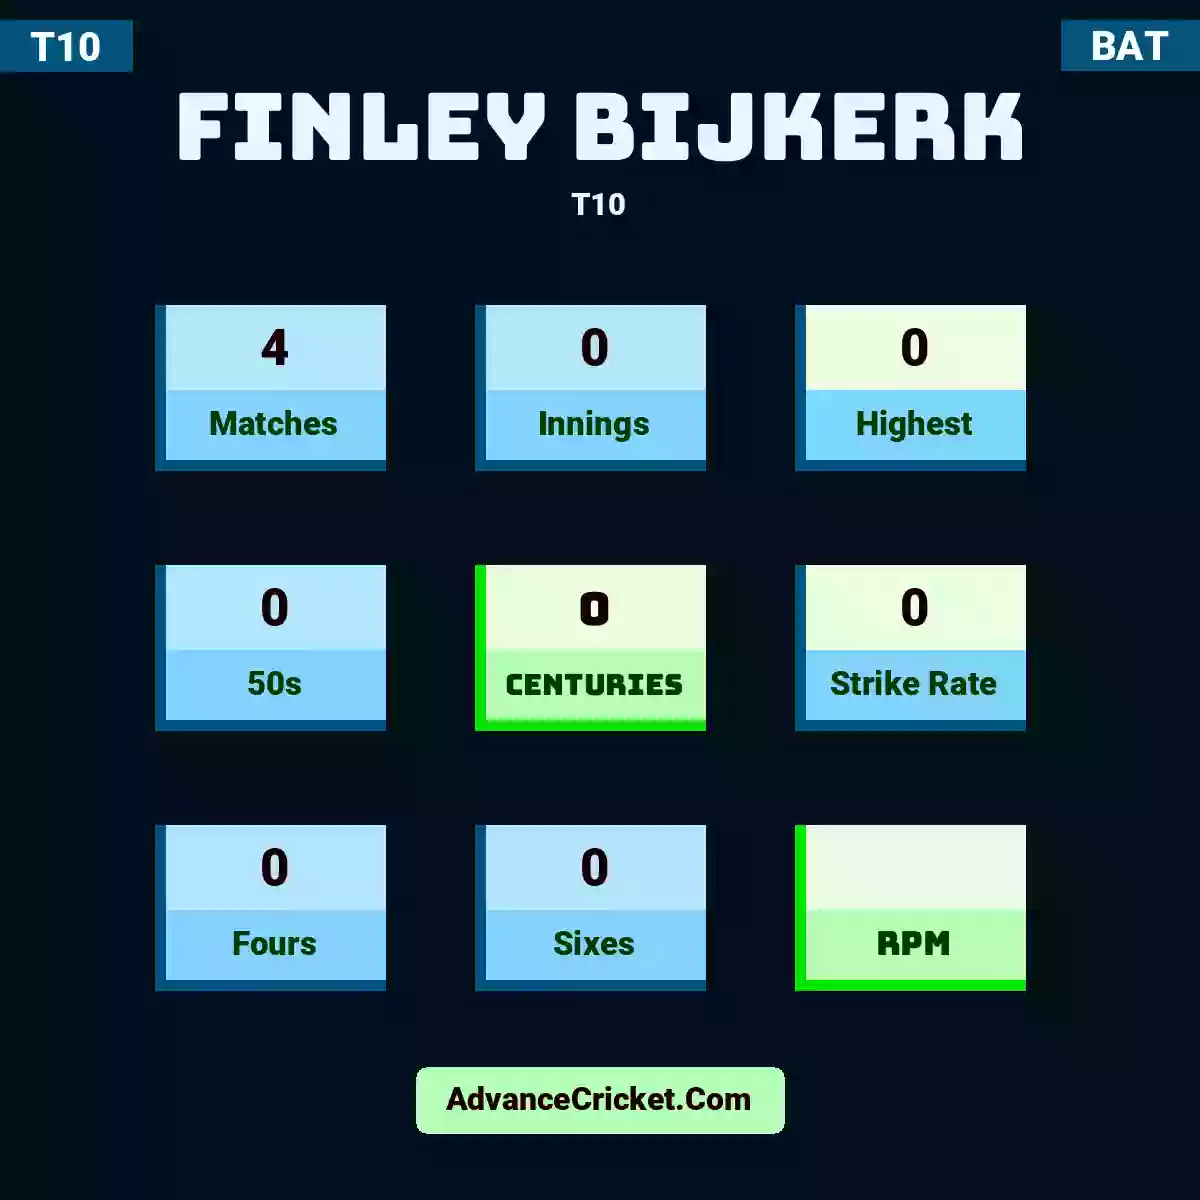 Finley Bijkerk T10 , Finley Bijkerk played 4 matches, scored 0 runs as highest, 0 half-centuries, and 0 centuries, with a strike rate of 0. F.Bijkerk hit 0 fours and 0 sixes.